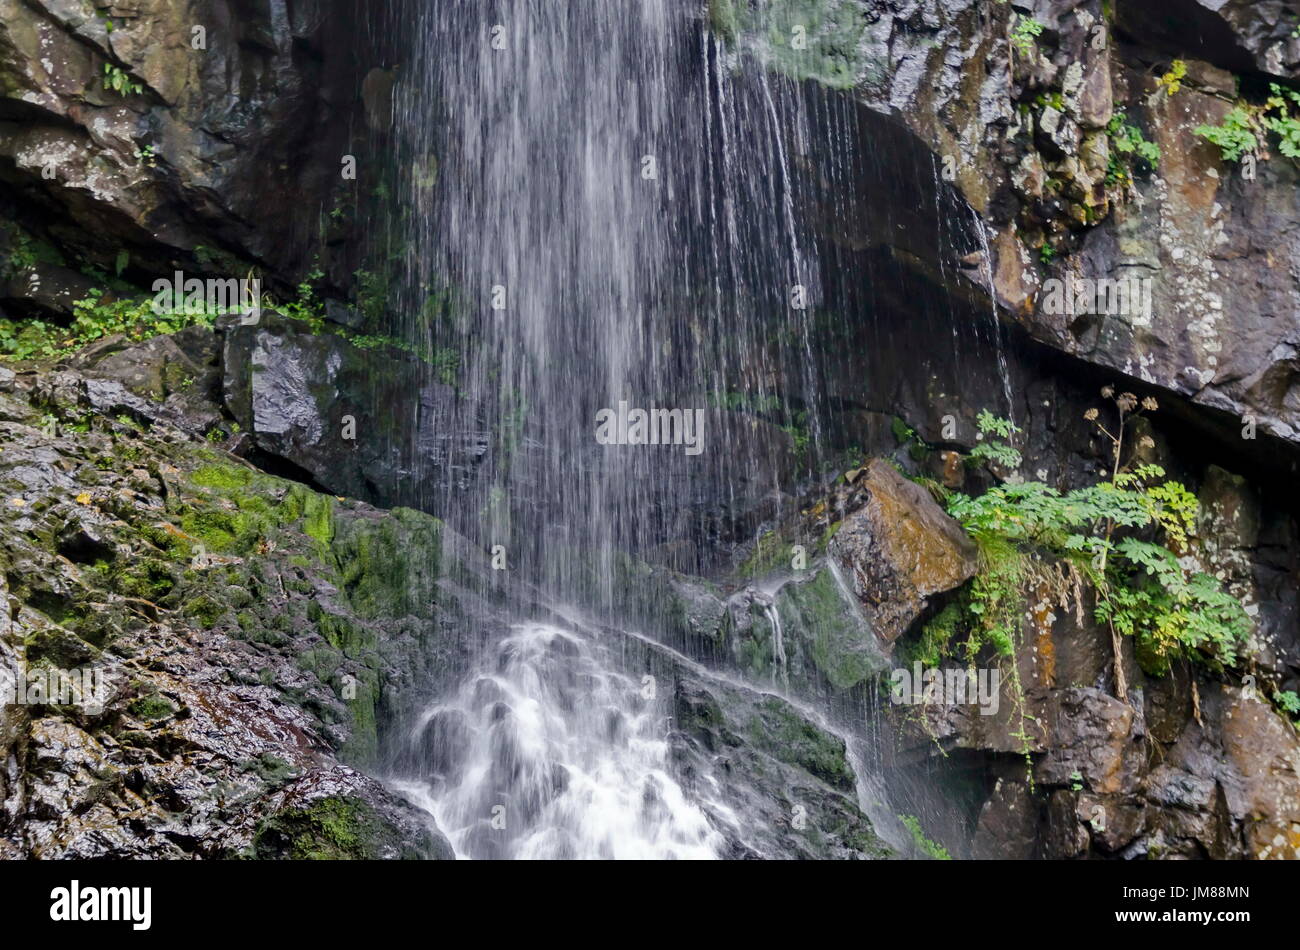 Under part of fresh Boyana waterfalls in deep forest and rock, Vitosha, Bulgaria Stock Photo